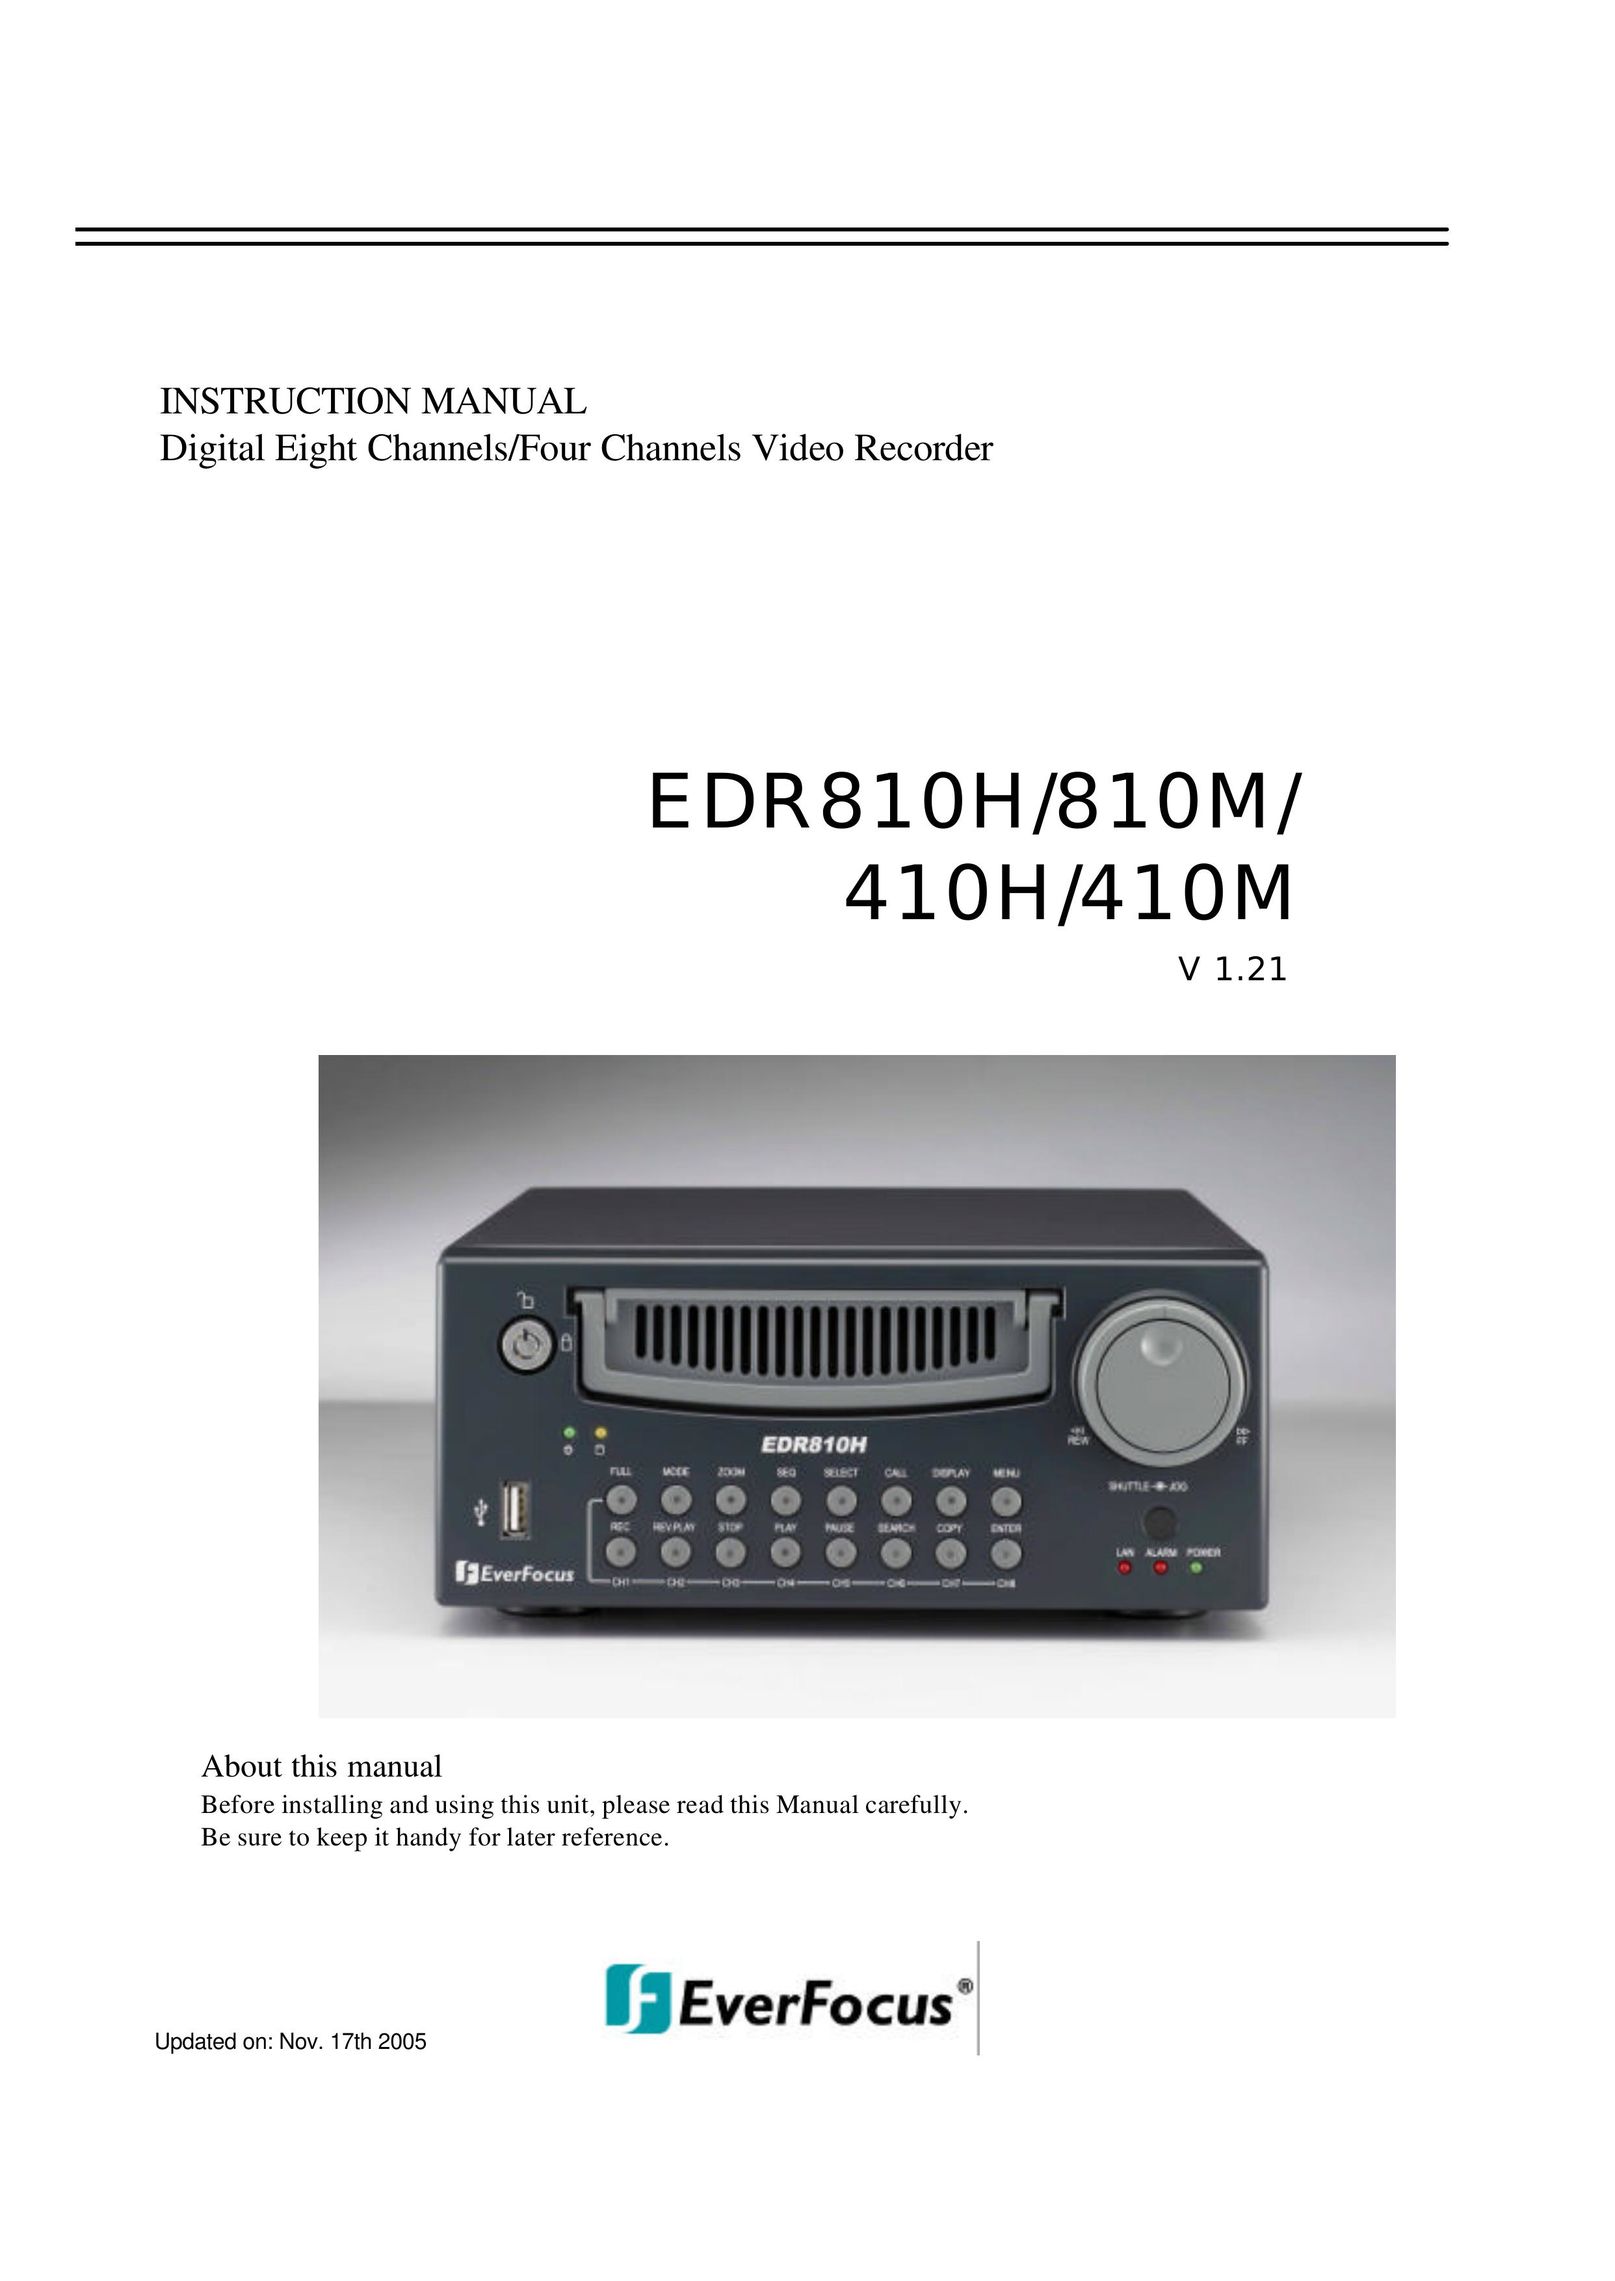 EverFocus 410M DVR User Manual